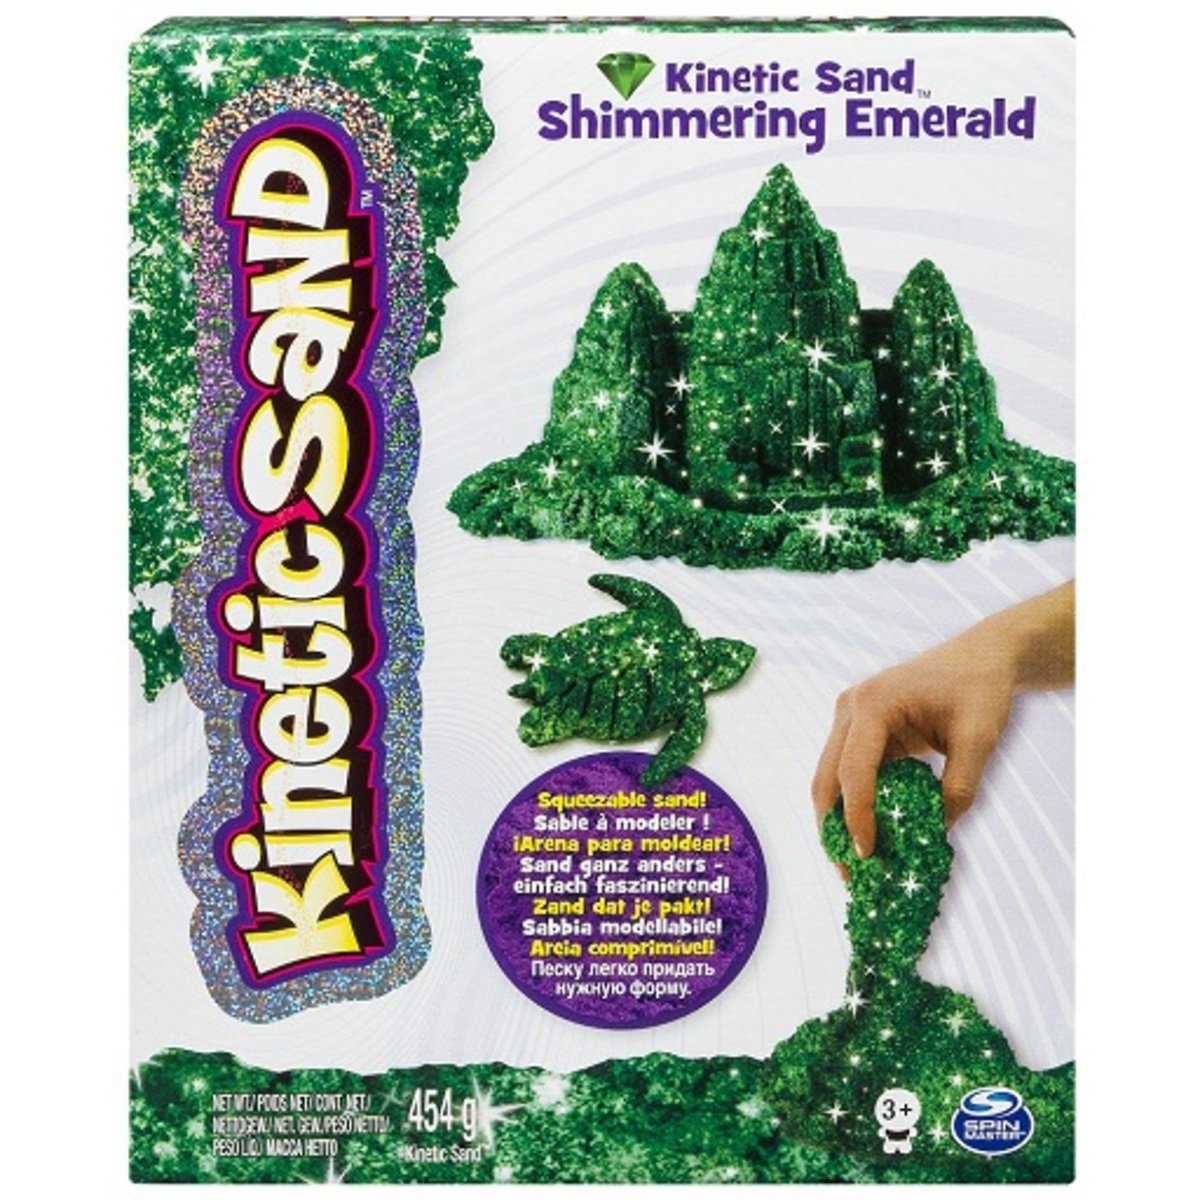 kinetic sand shimmering emerald